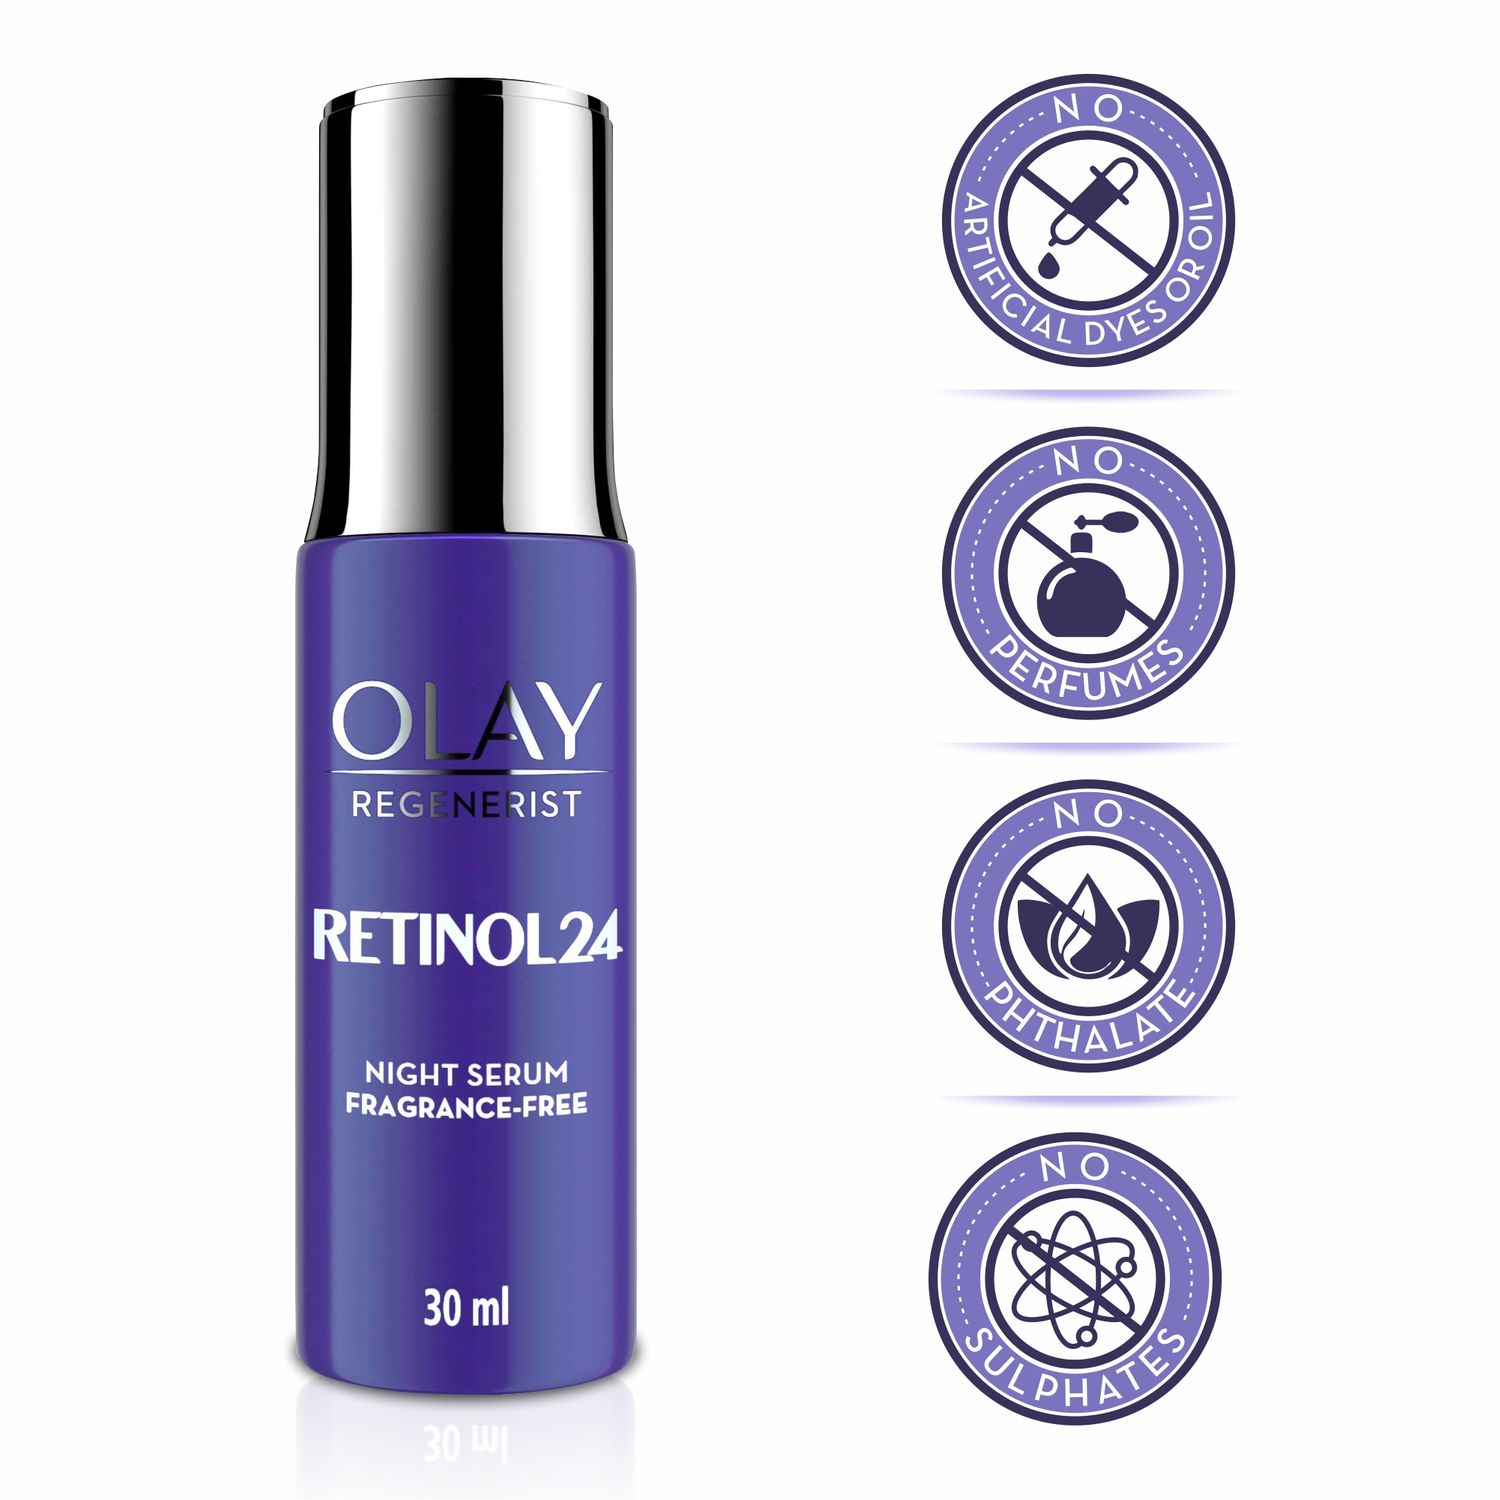 Olay Regenerist Micro-Sculpting Cream 50g and Retinol 24 Night Serum 30ml - Round The Clock Skincare